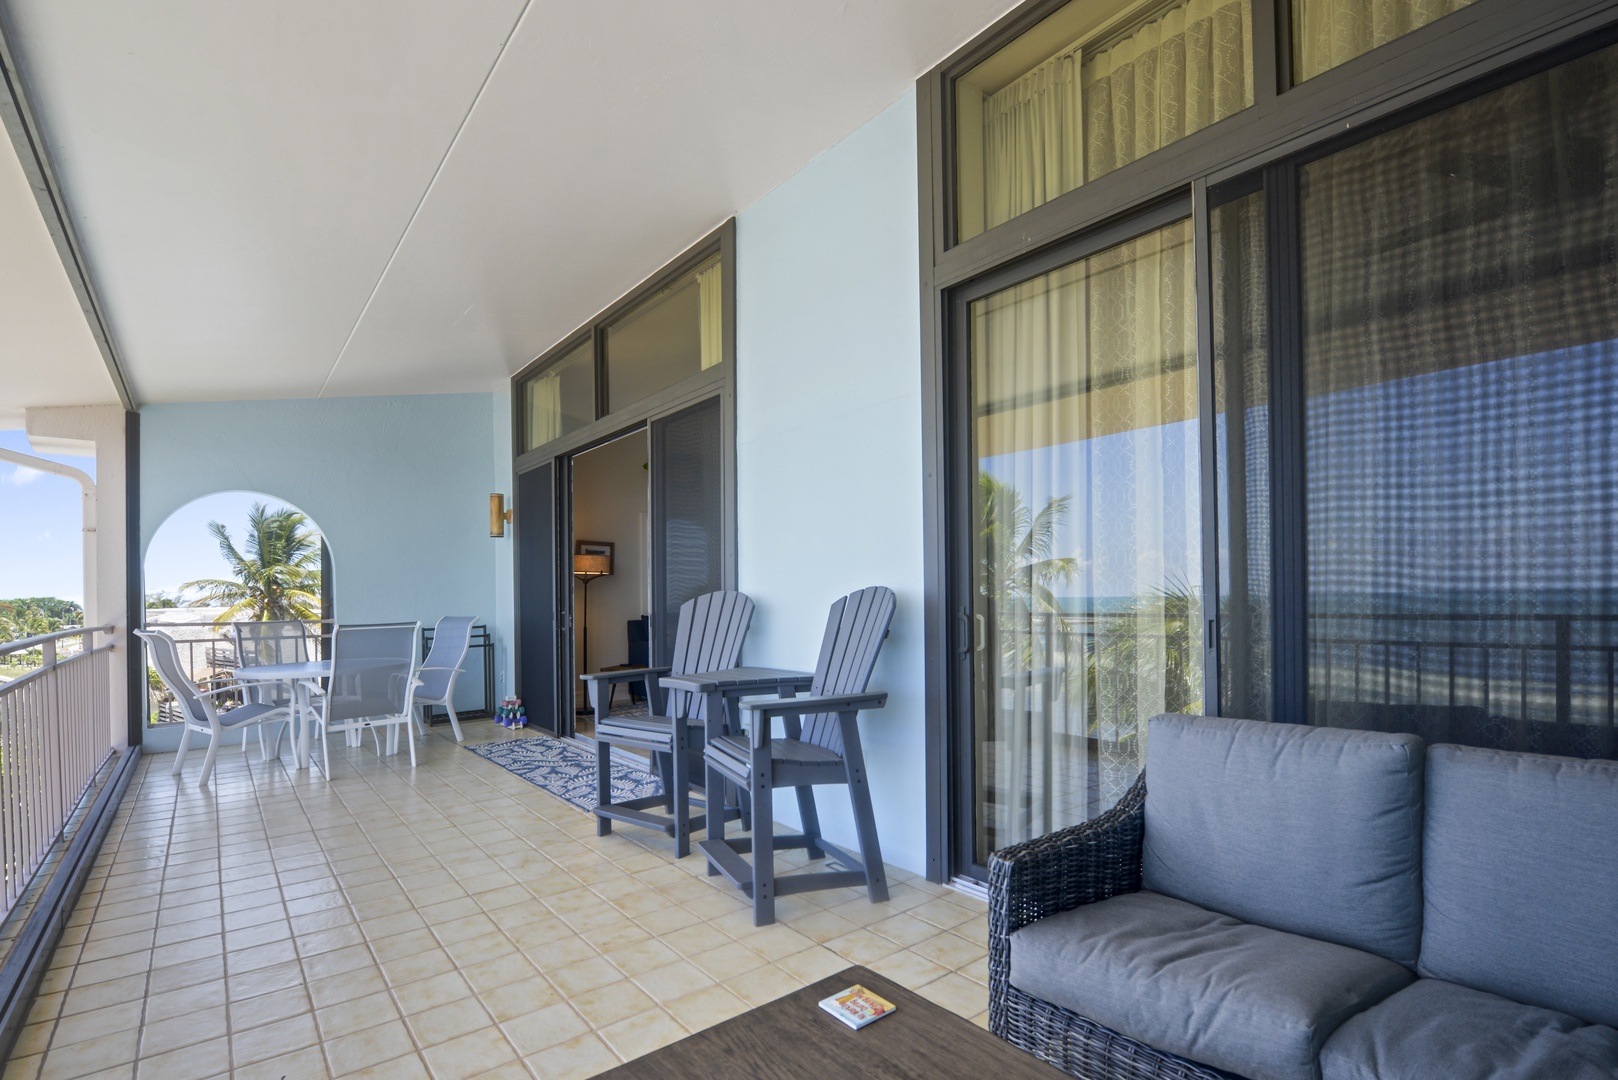 Key West Beach Club Paradise Penthouse #401 Private Balcony